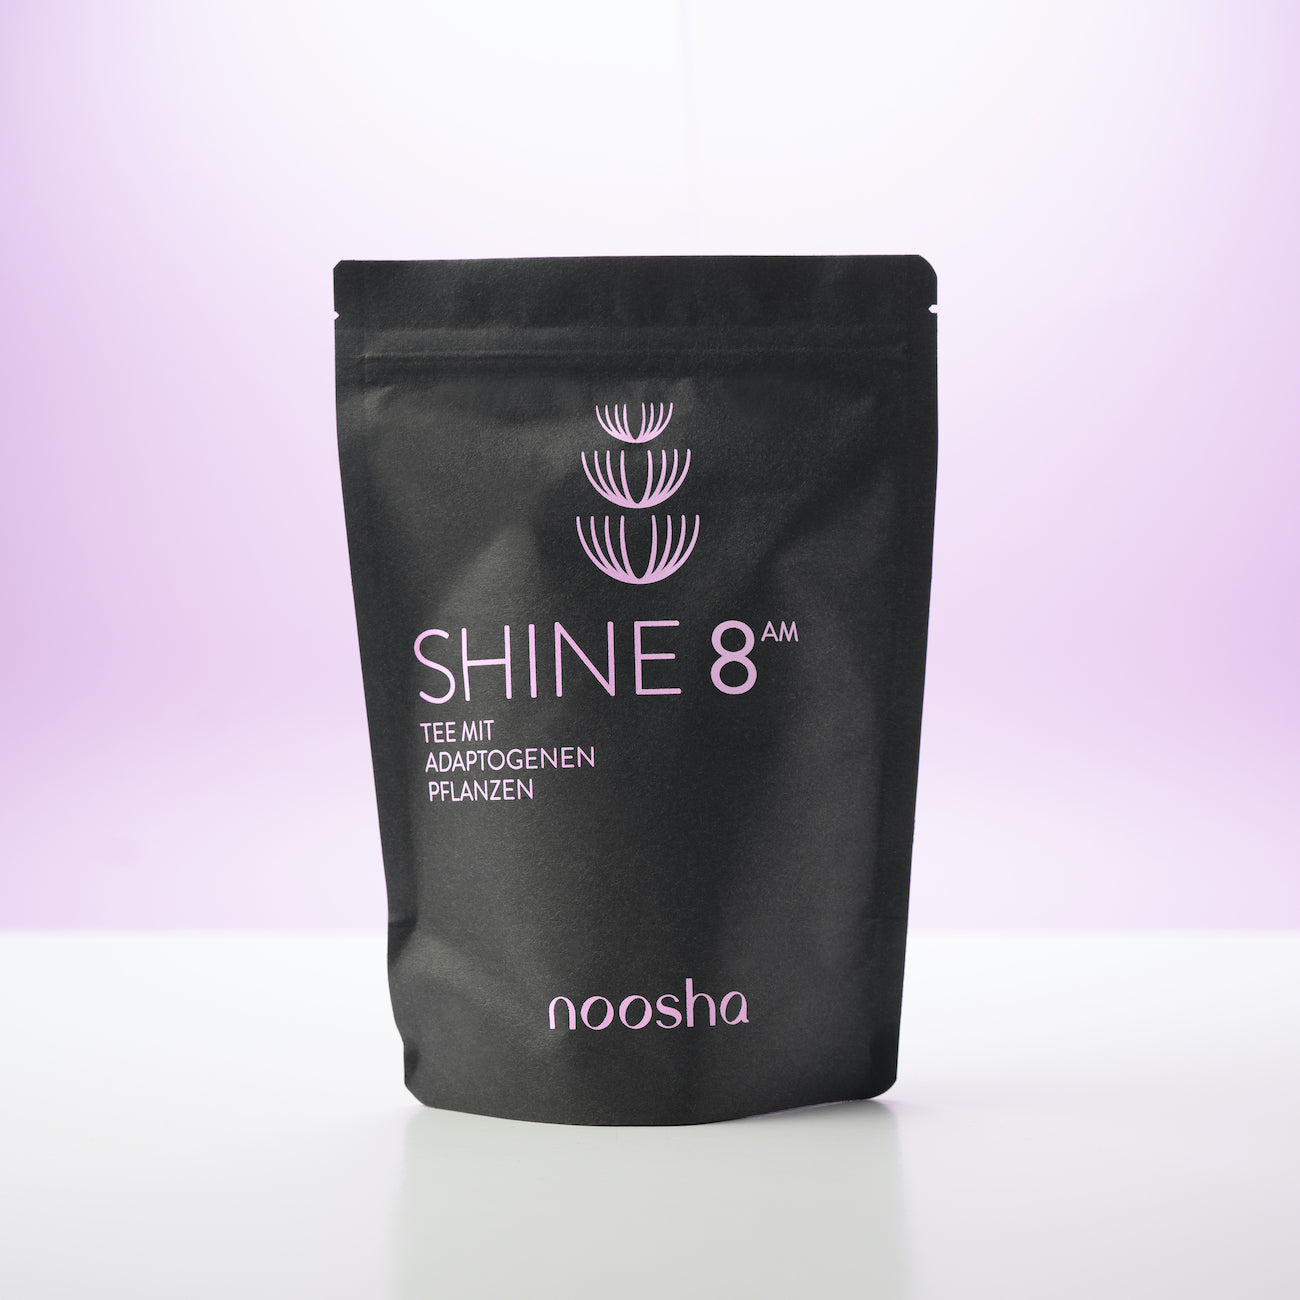 Packaging of SHINE 8AM tea made by noosha